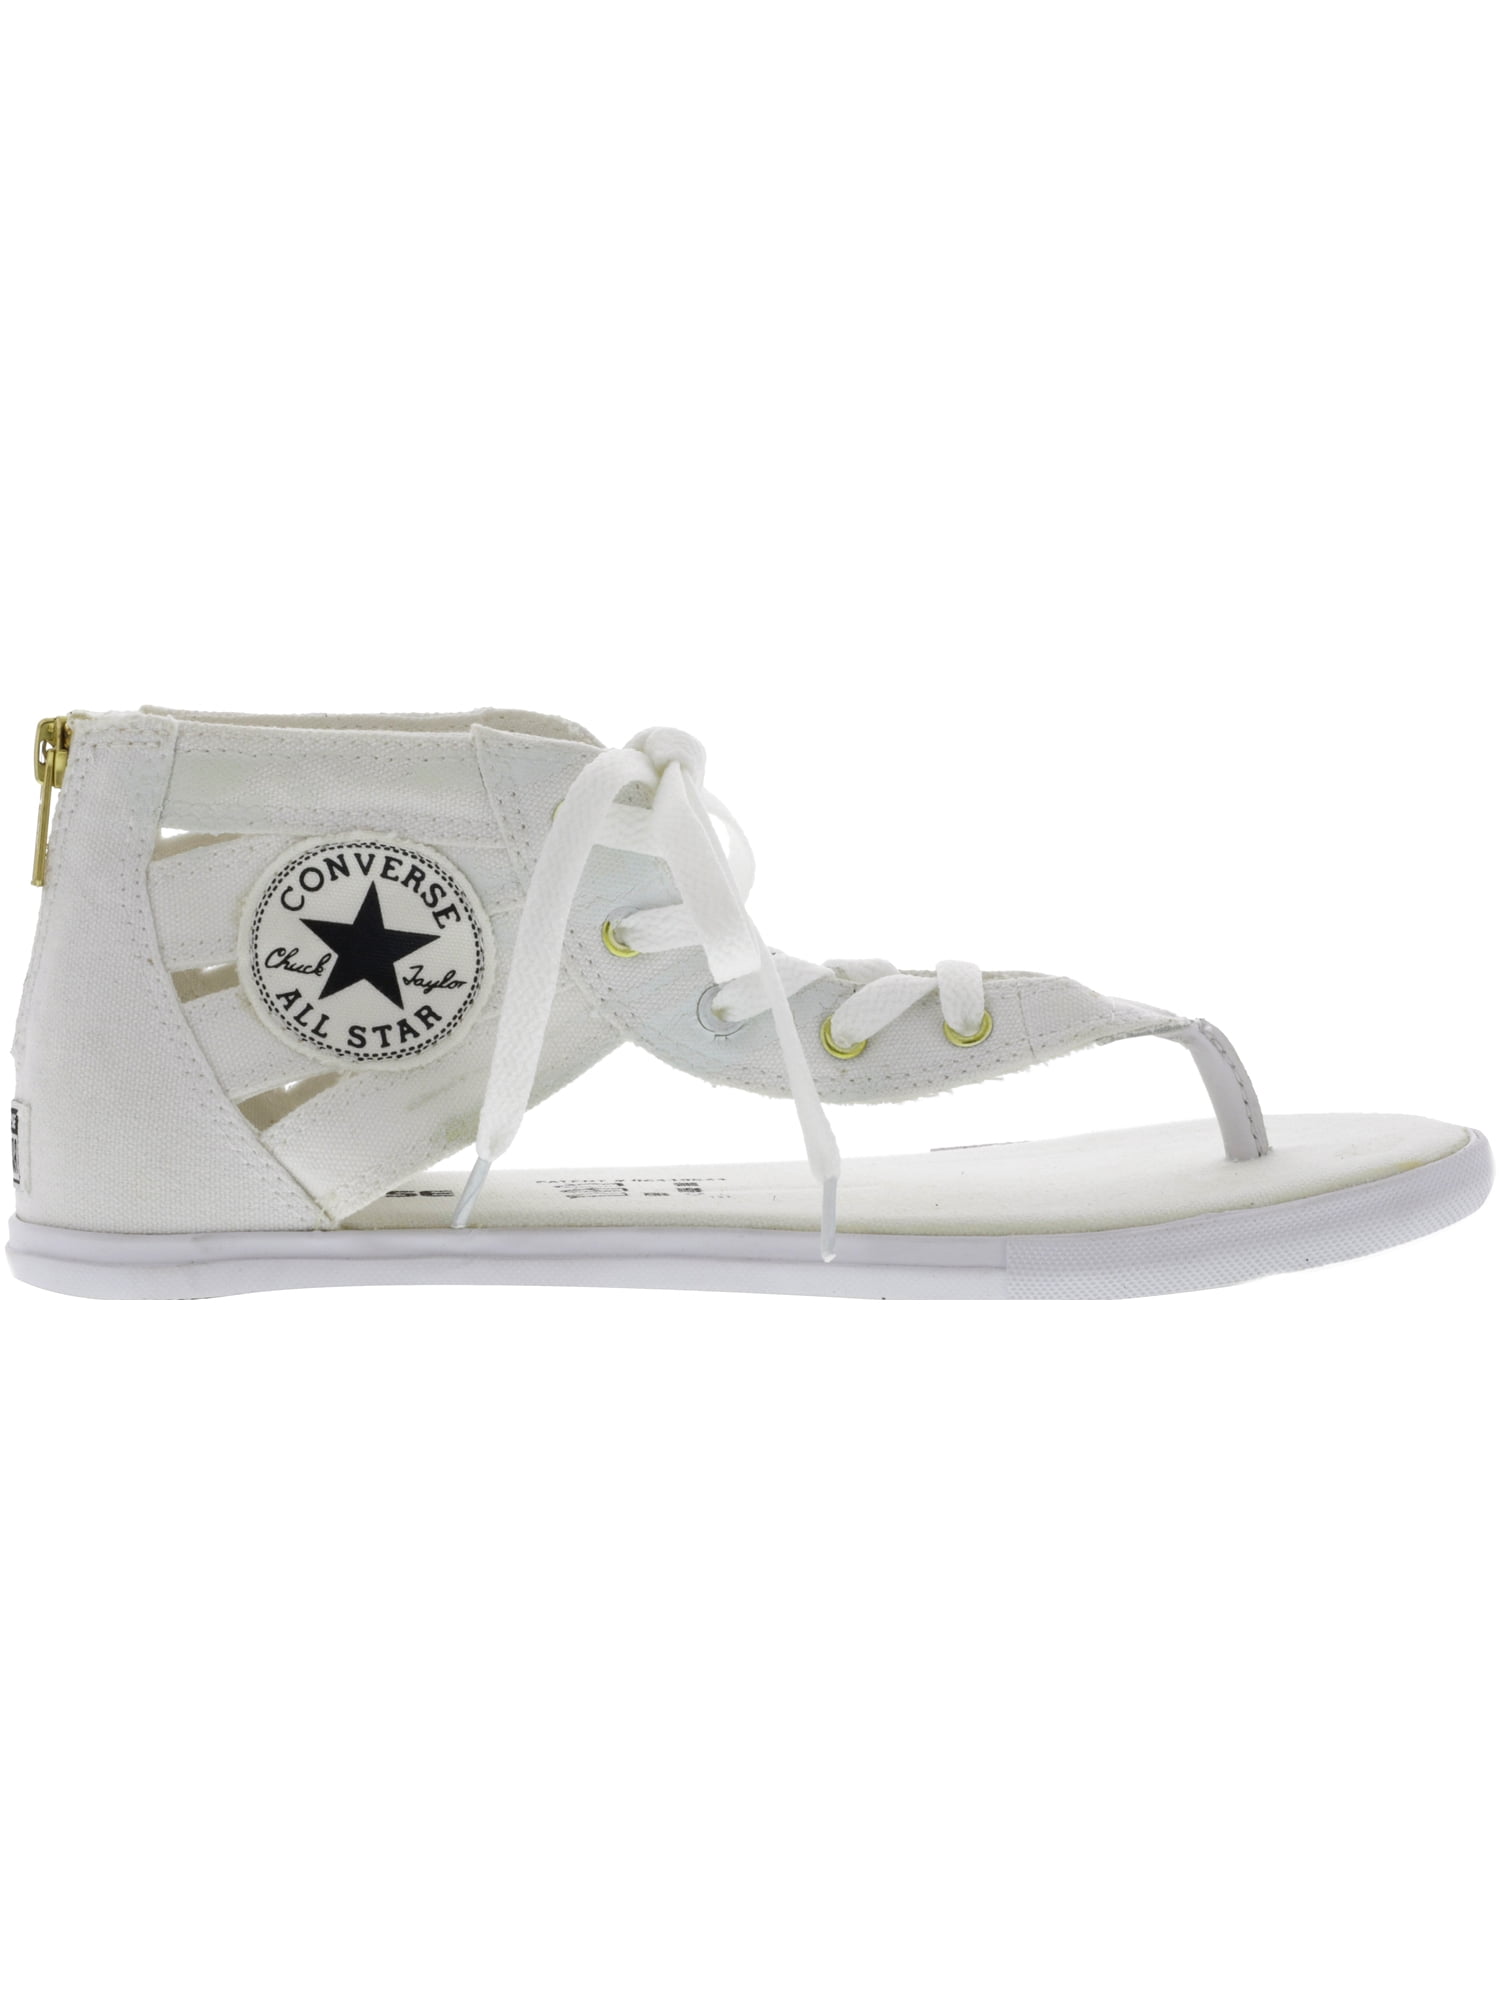 white converse sandals